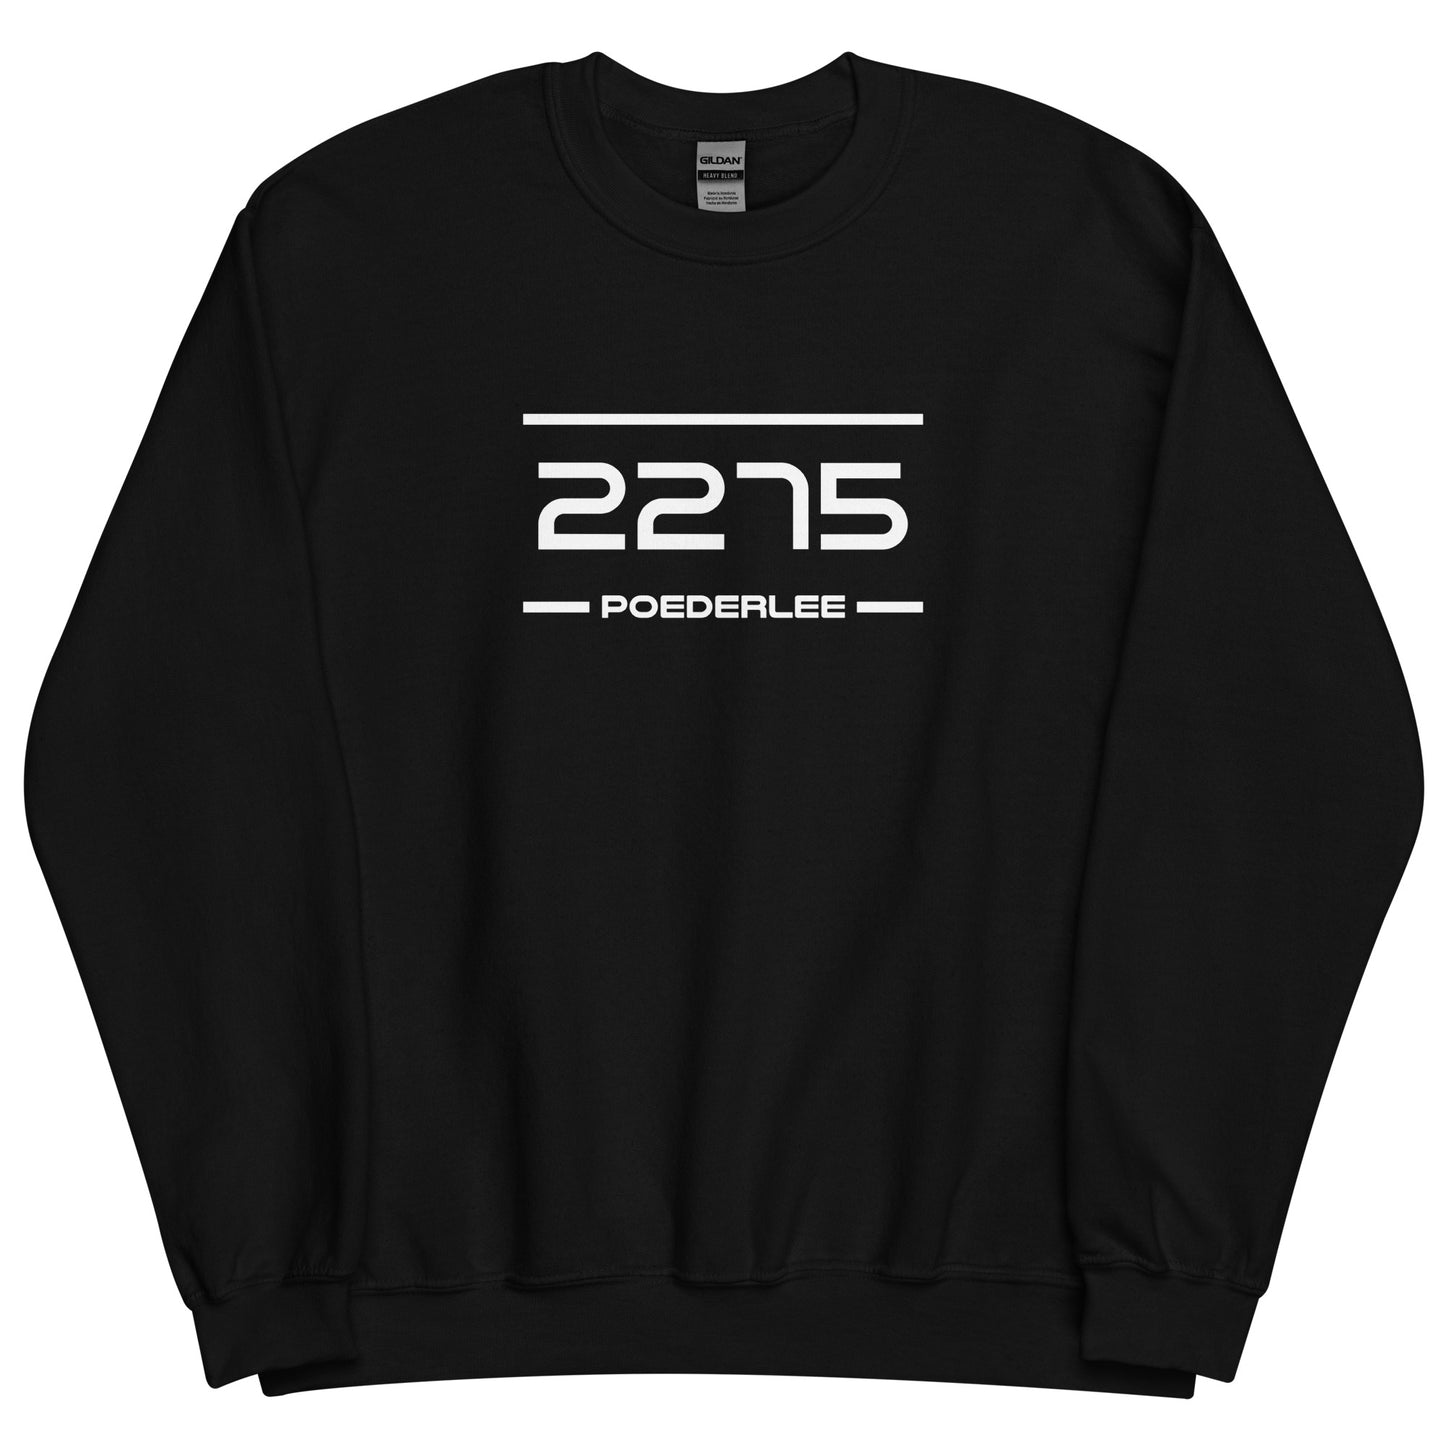 Sweater - 2275 - Poederlee (M/V)